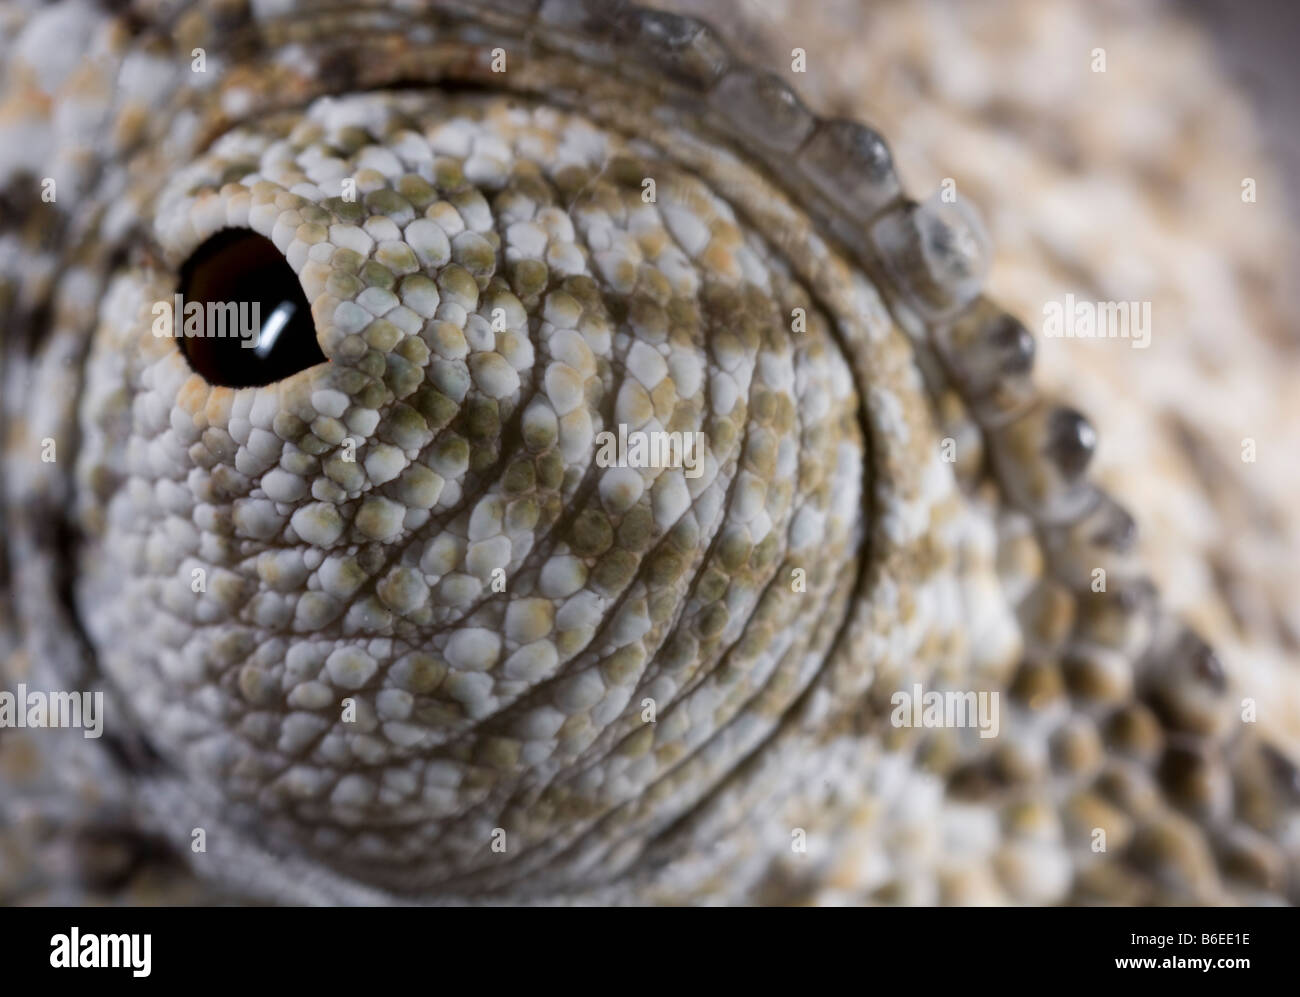 Africa Namibia Caprivi Strip dettaglio del bulbo oculare del lembo strozzata camaleonte Chamaeleo dilepis Foto Stock